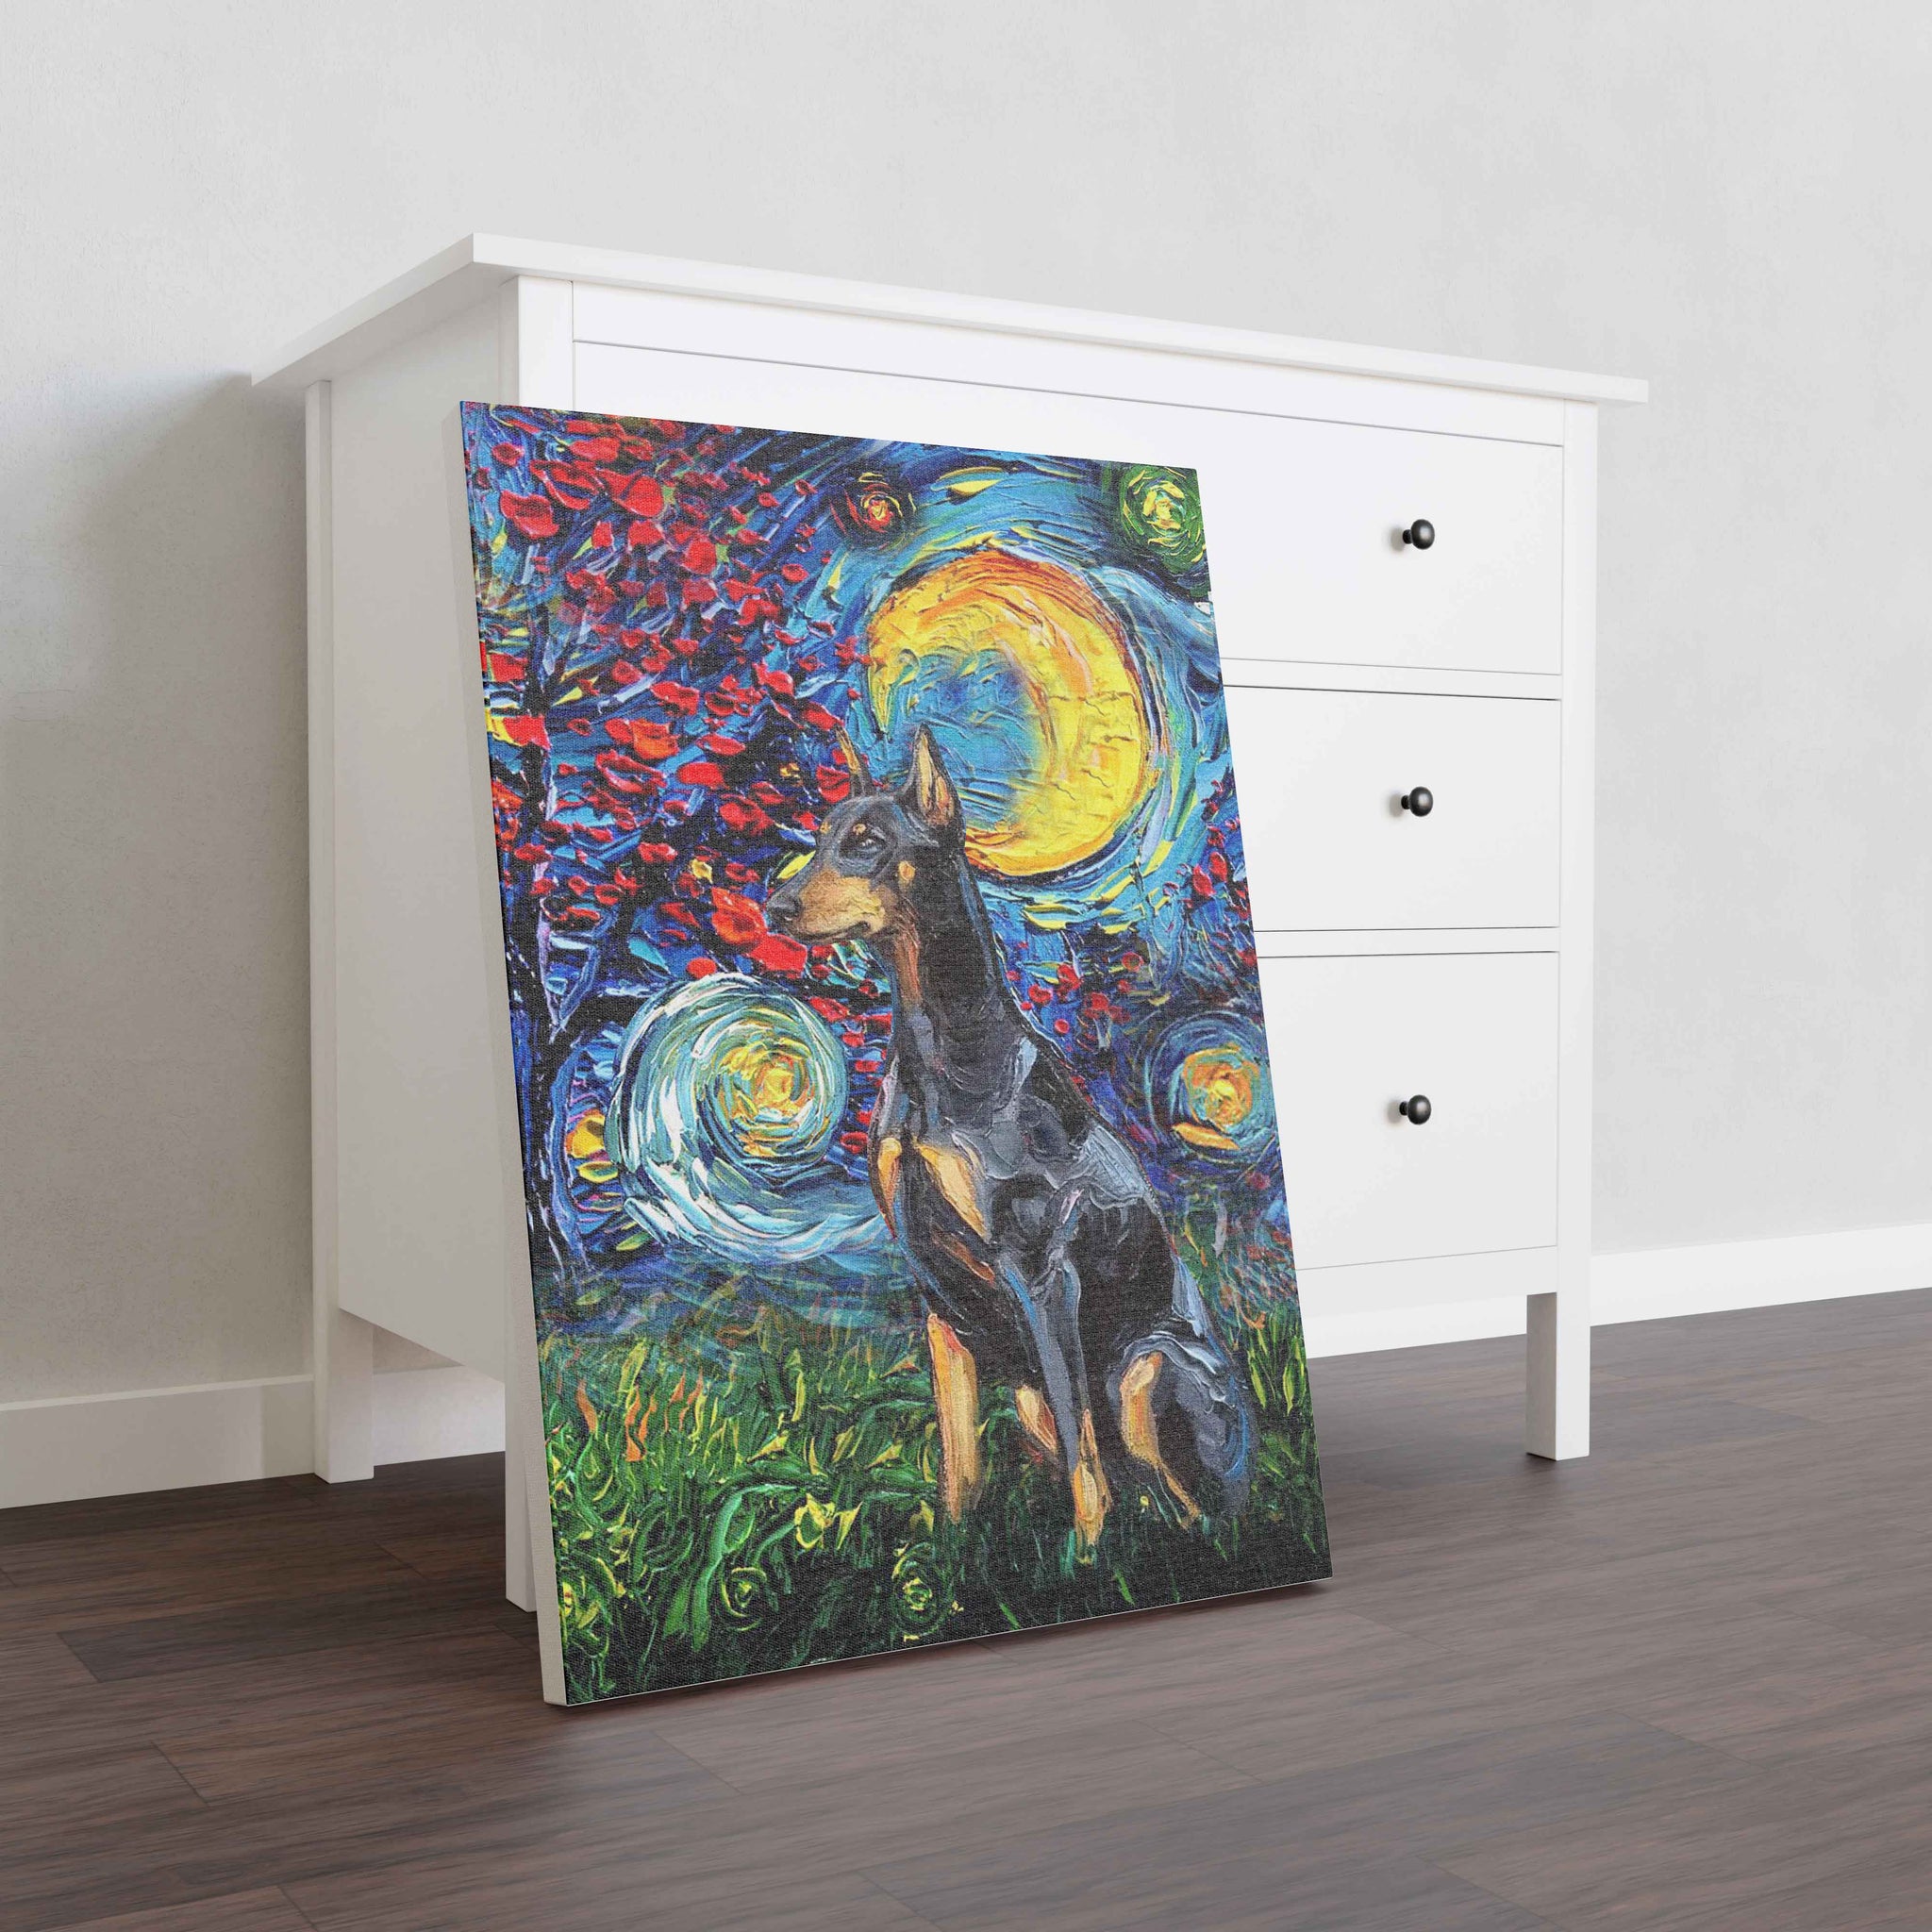 Skitongifts Poster No Frame, Wall Art, Home Decor Pinscher Dog Starry Night Style Halloween-TT1008